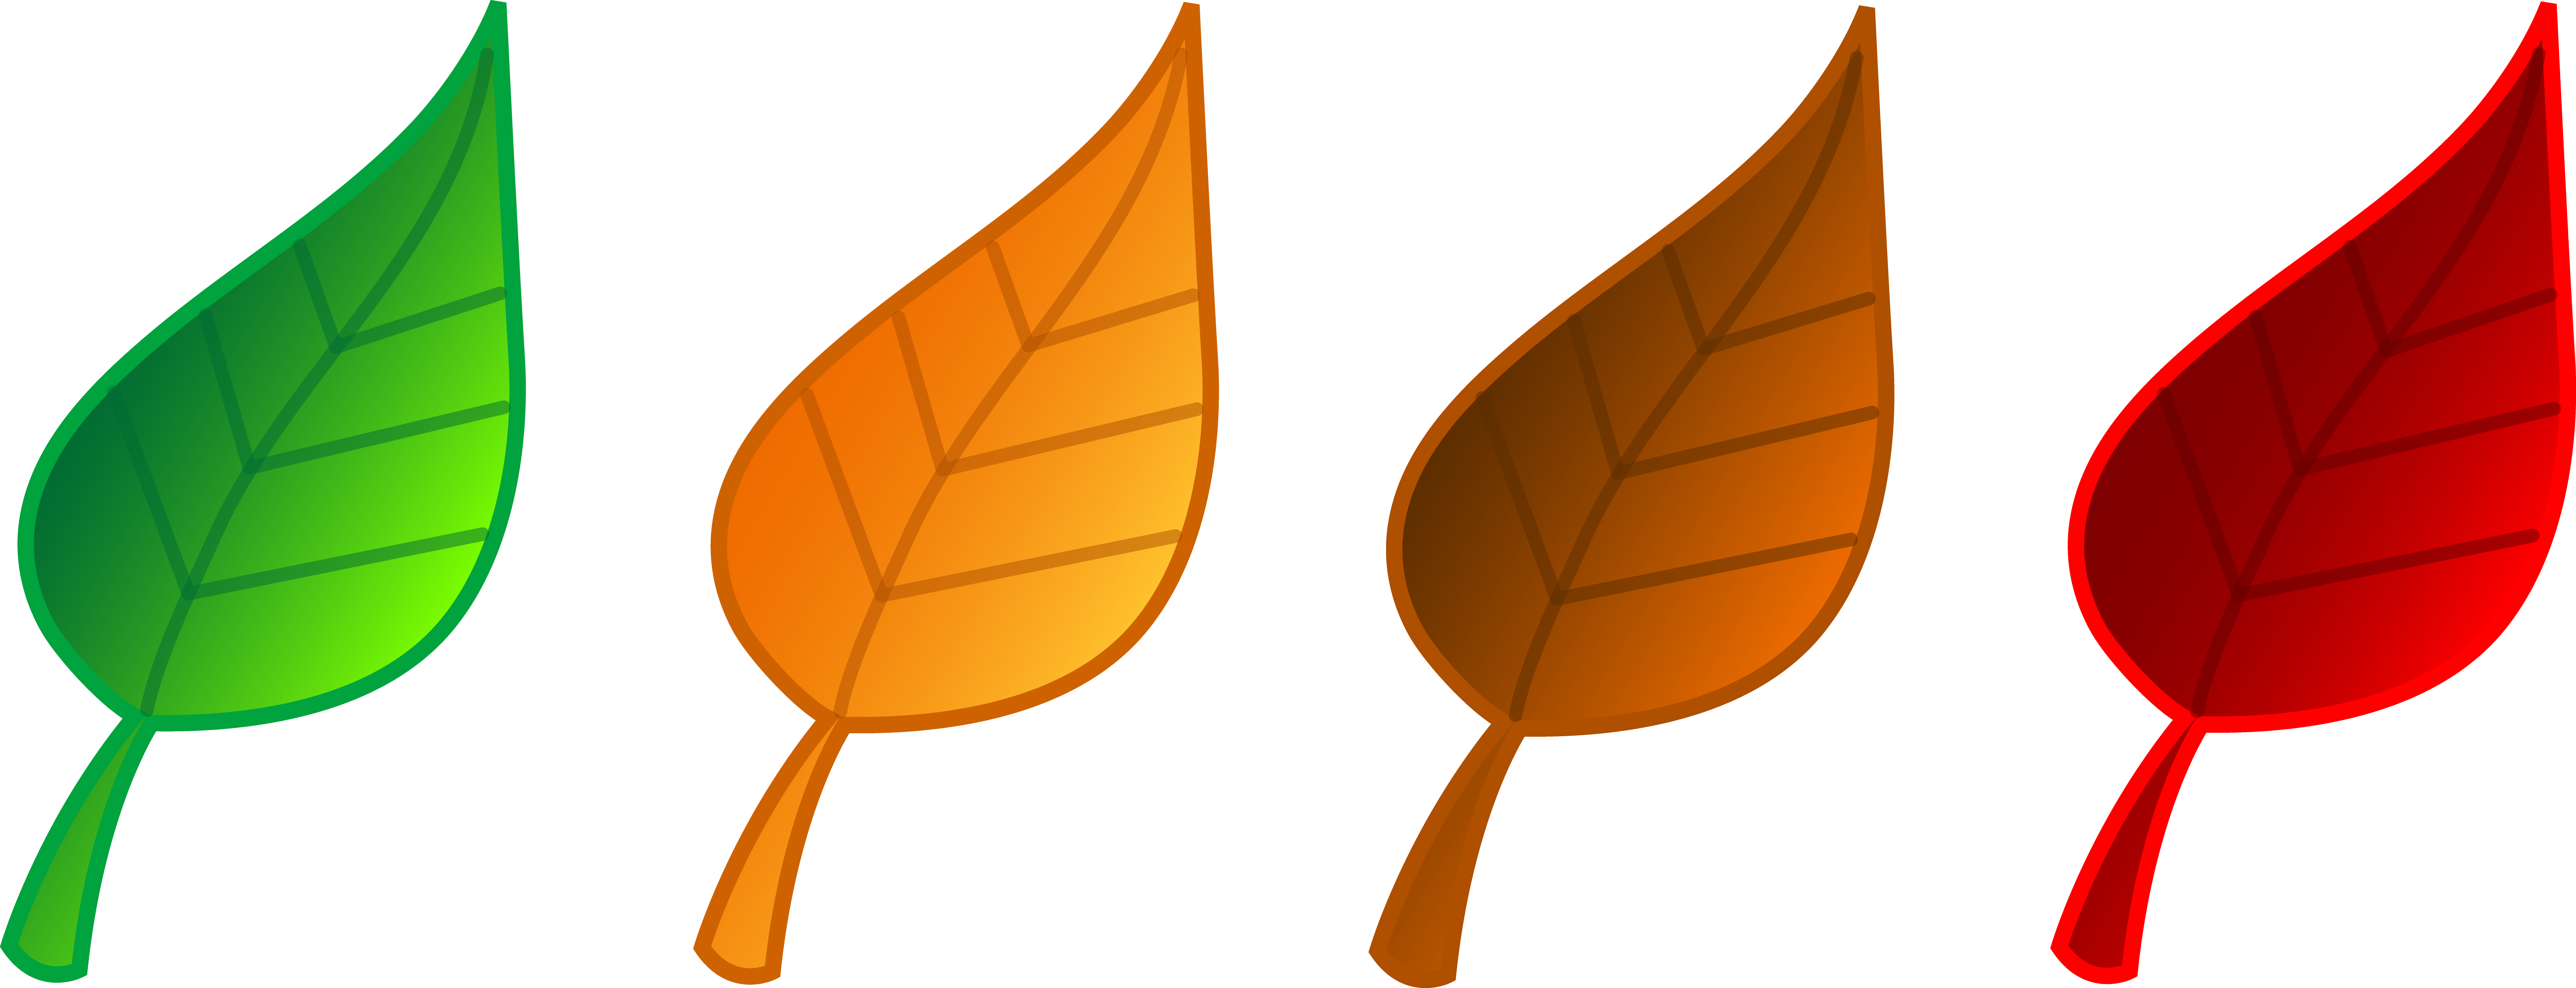 leaf-fall-leaves-clipart-clipartion-com-clipartix